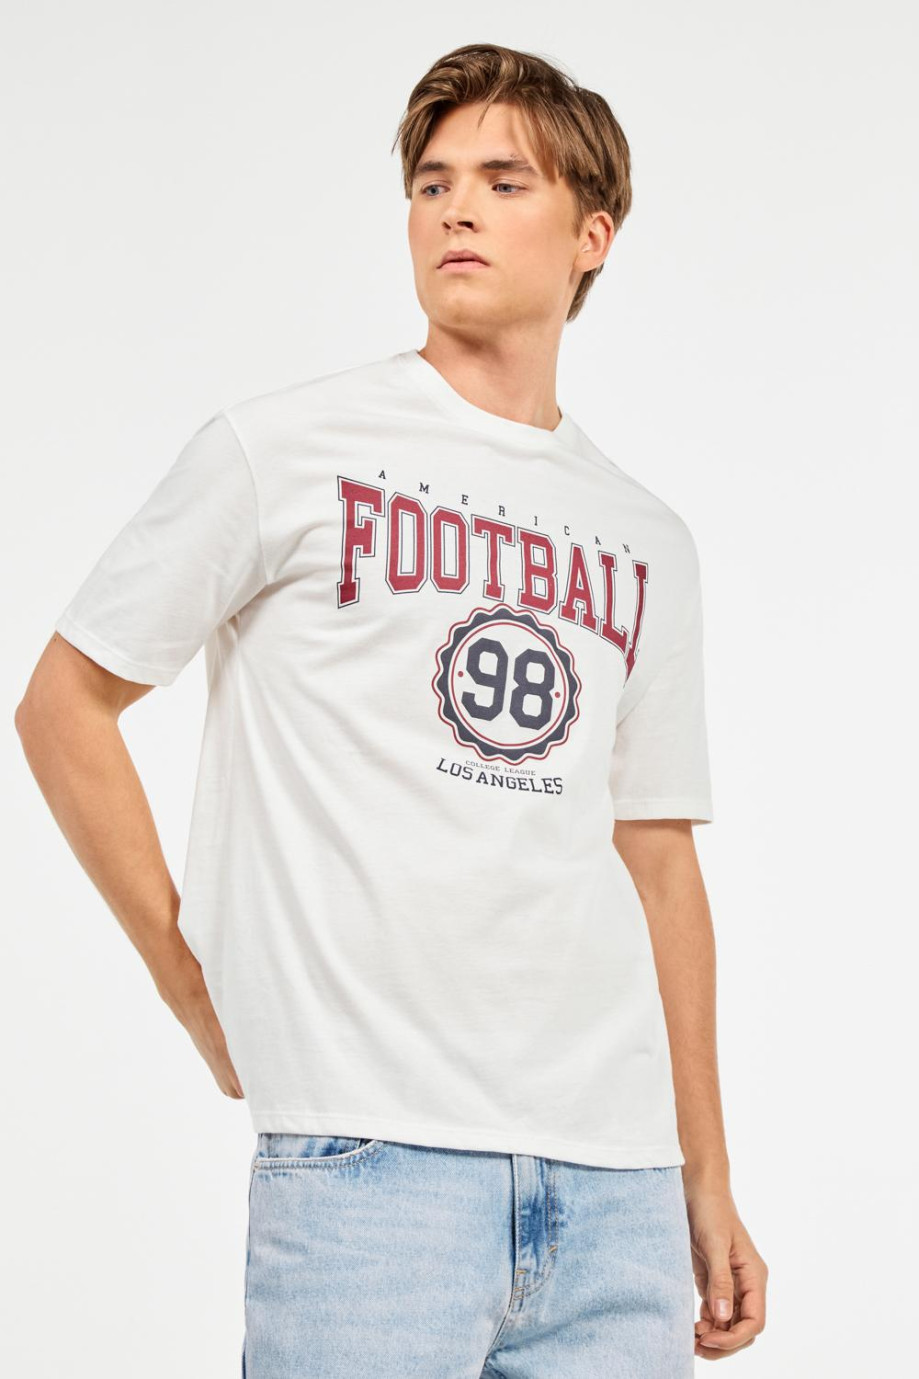 Camiseta crema manga corta con diseño college de fútbol